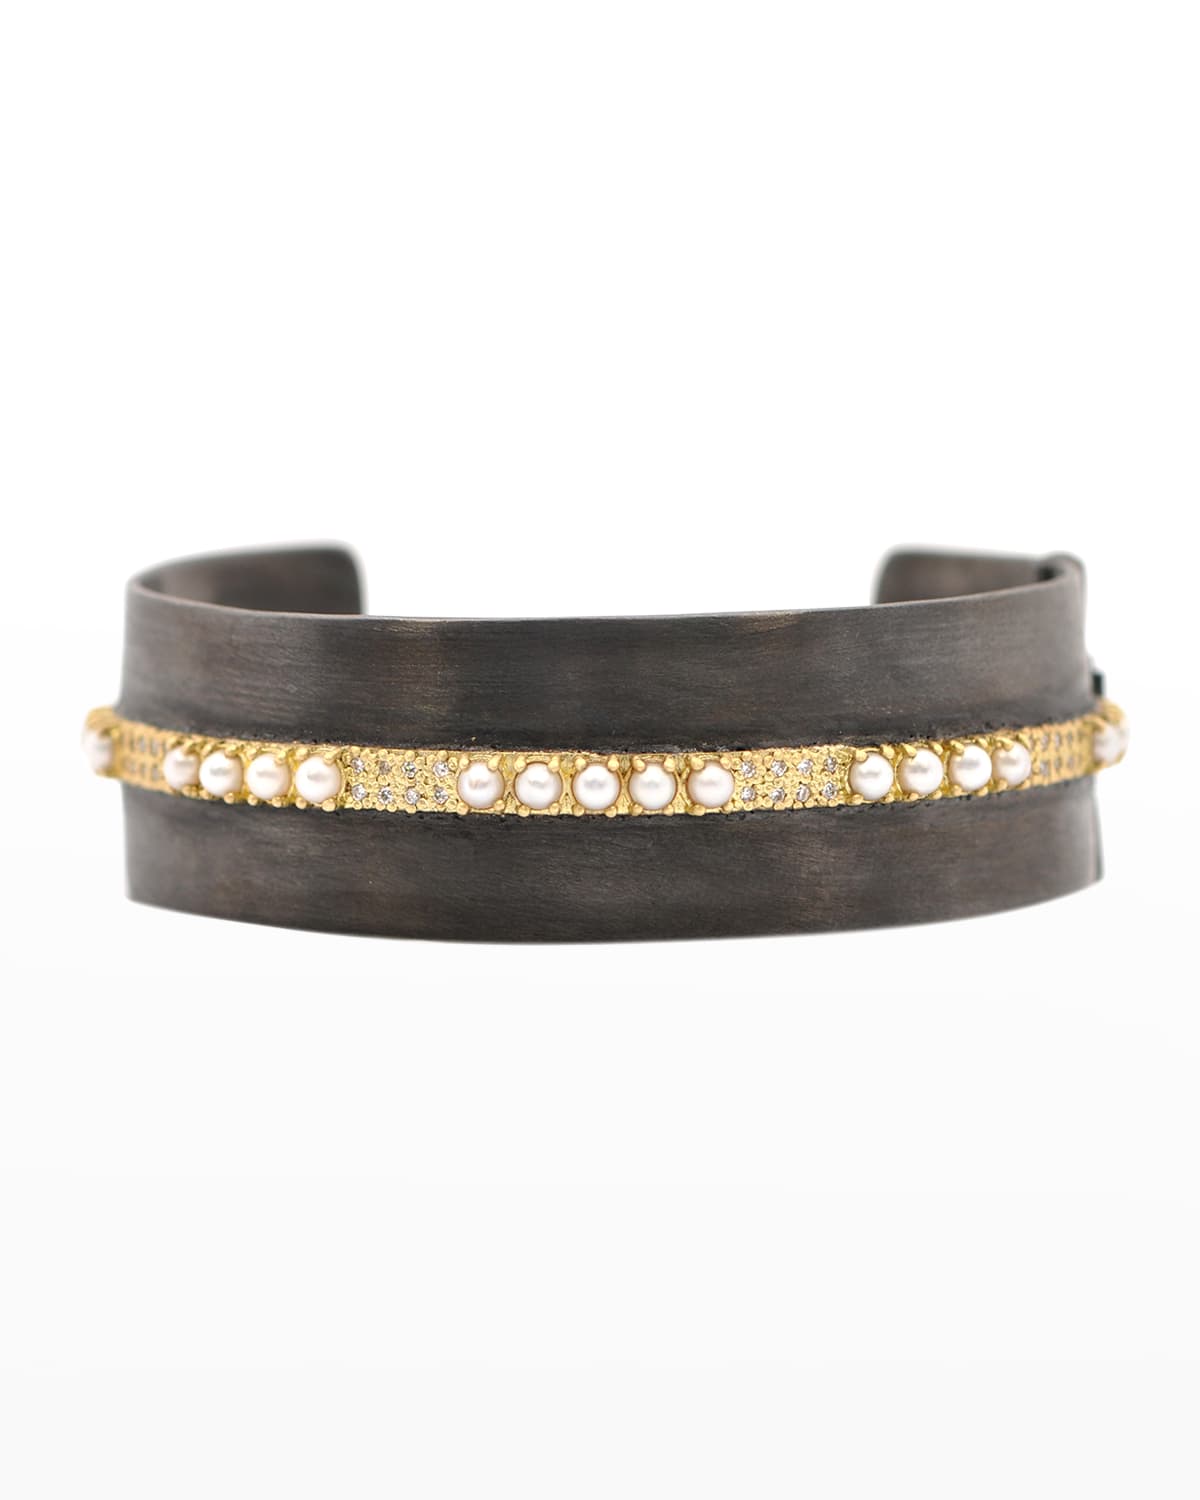 New Autumn Mocha Rustic Leather Wide Cuff Bracelet w/ Goldtone Clasp 